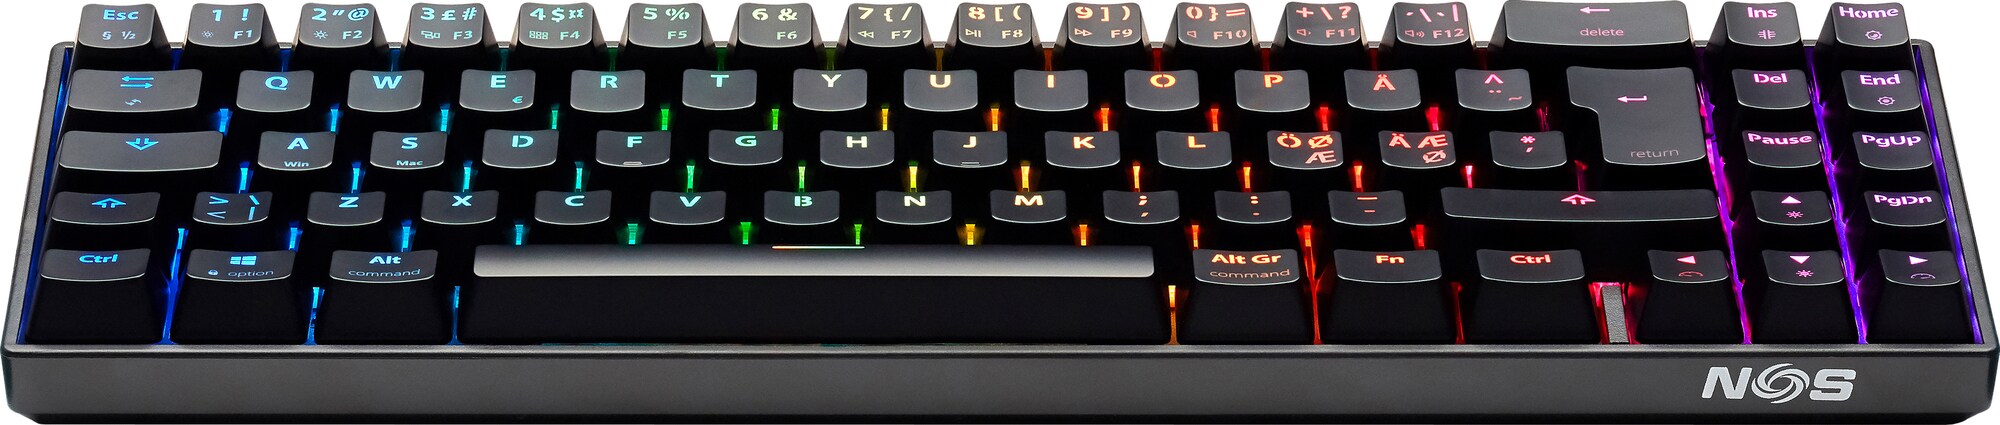 NOS C-650 Compact PRO RGB tastatur - Gamingtastatur - Elkjøp